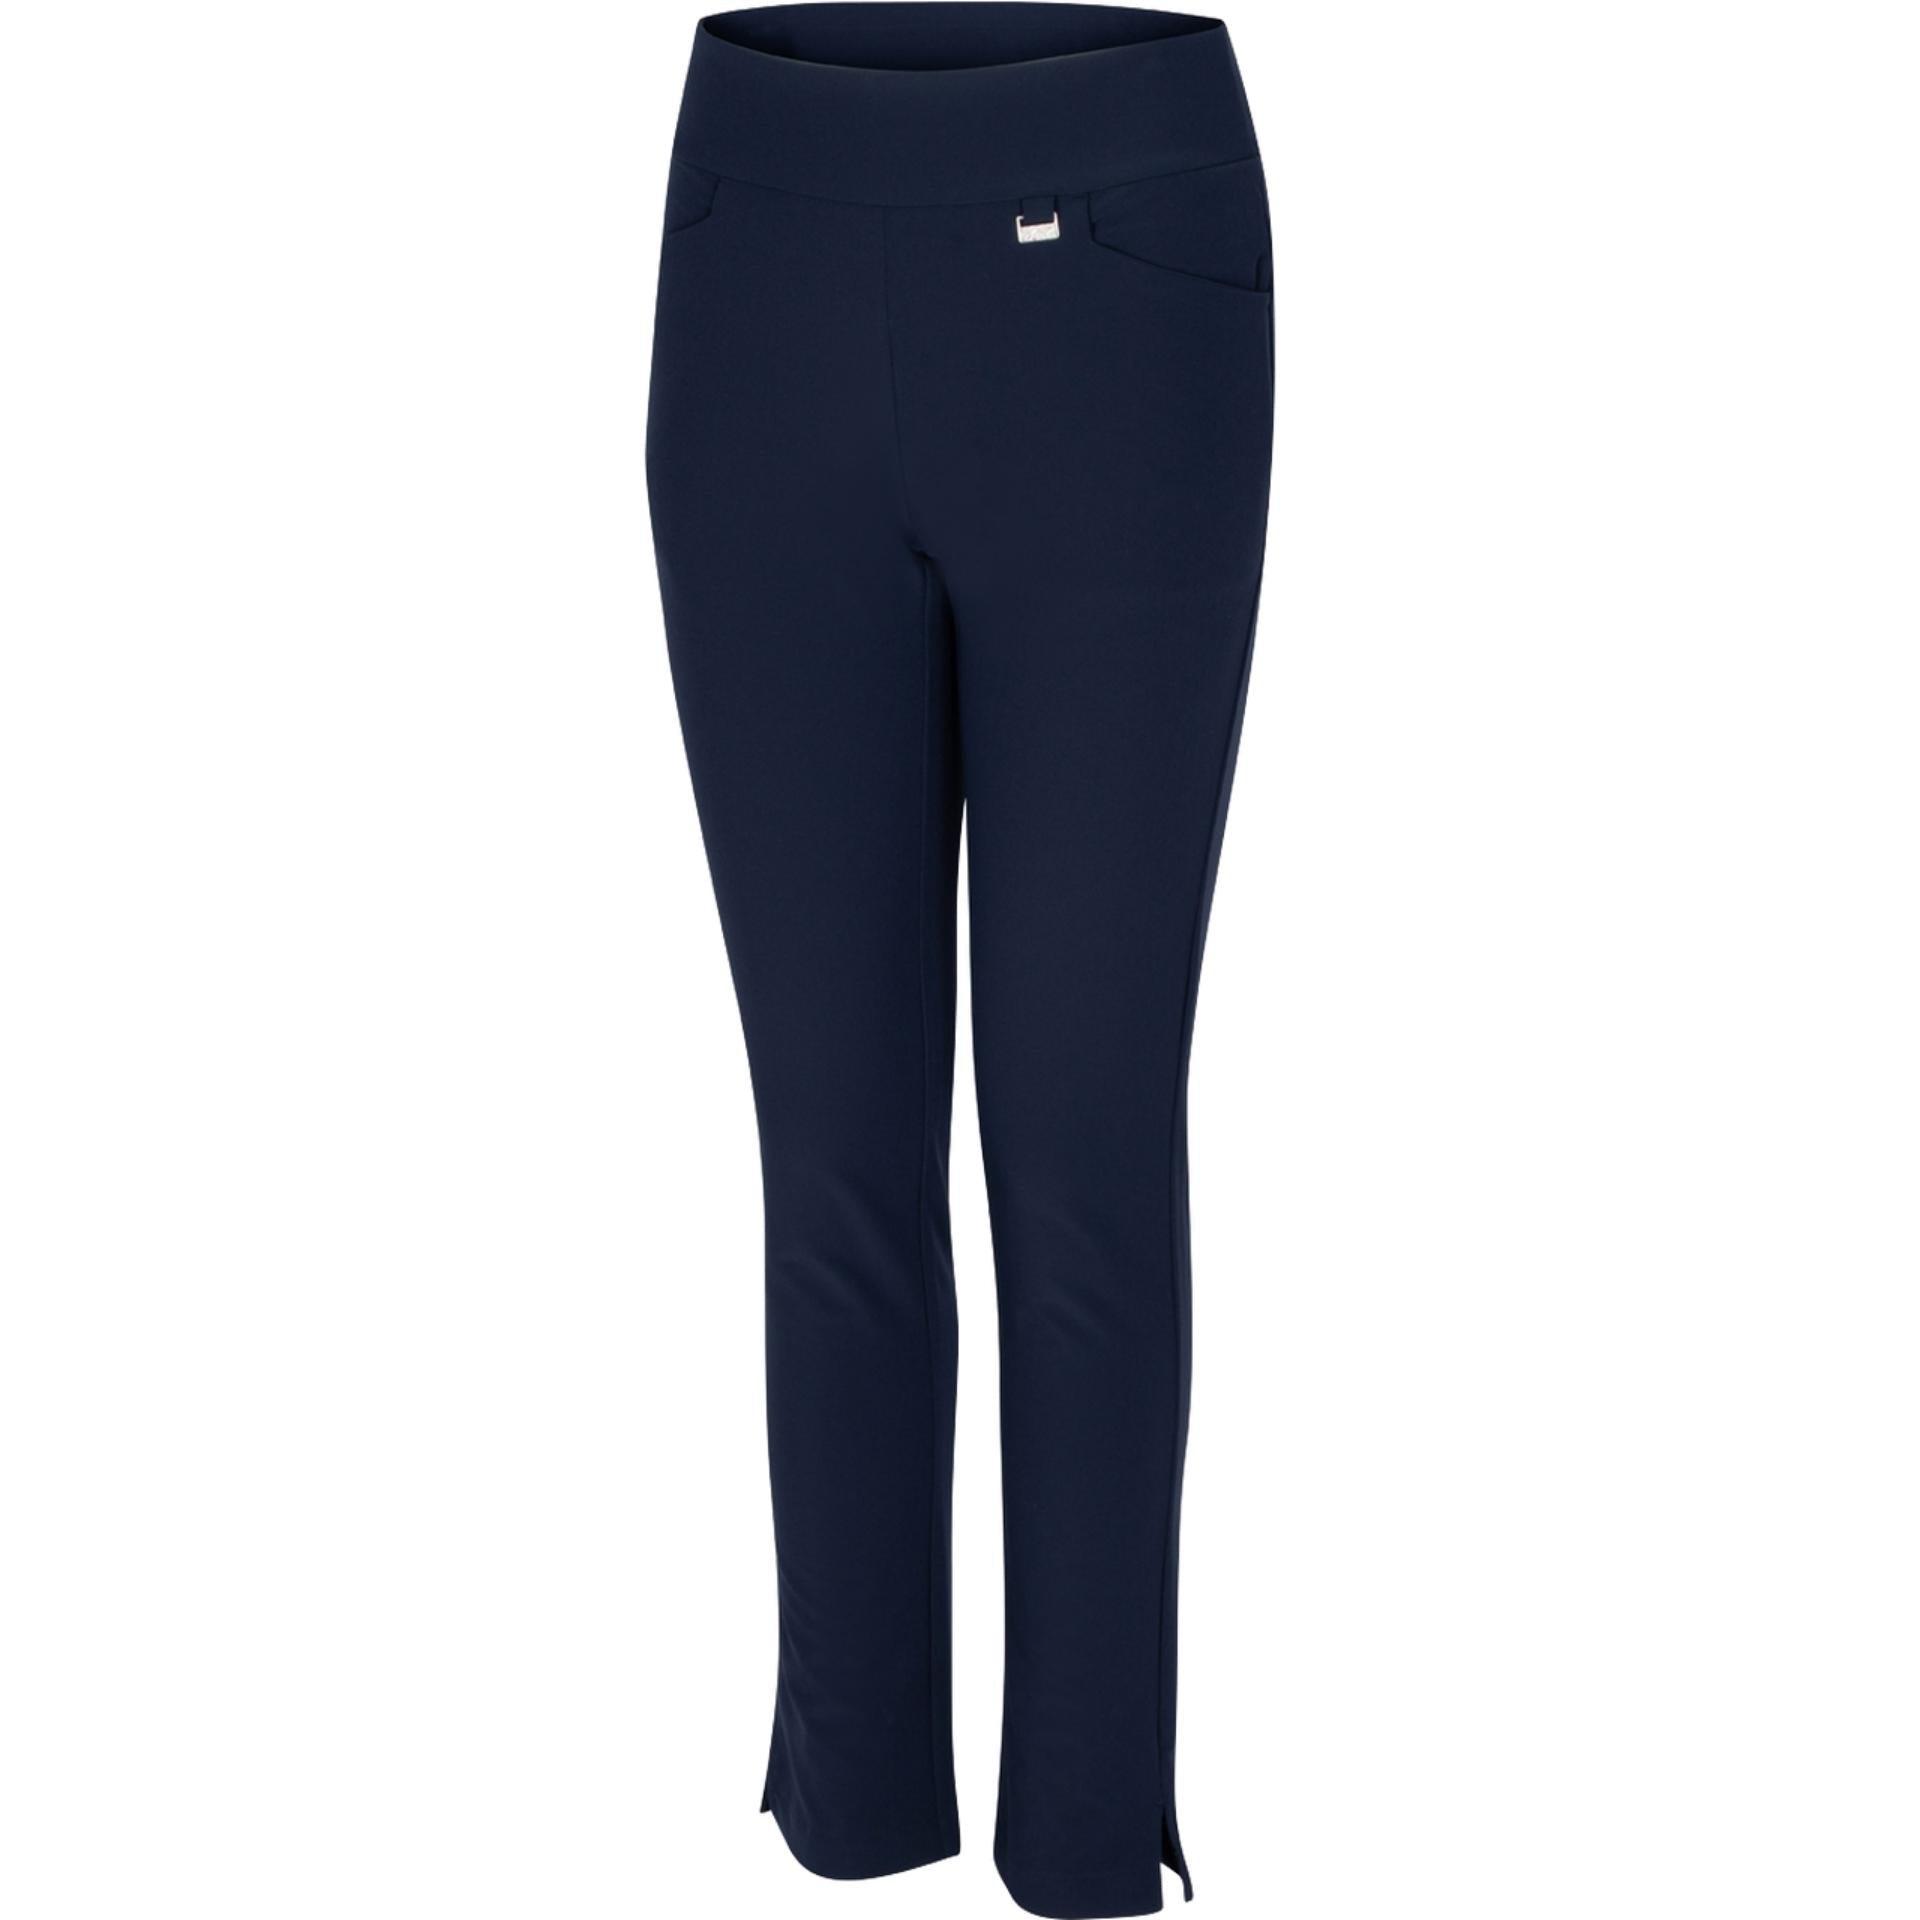 Ladies Golf Pants Pockets | Greg Norman Womens Golf Pants | Pgm Golf Clothes  Women - Golf Pants - Aliexpress